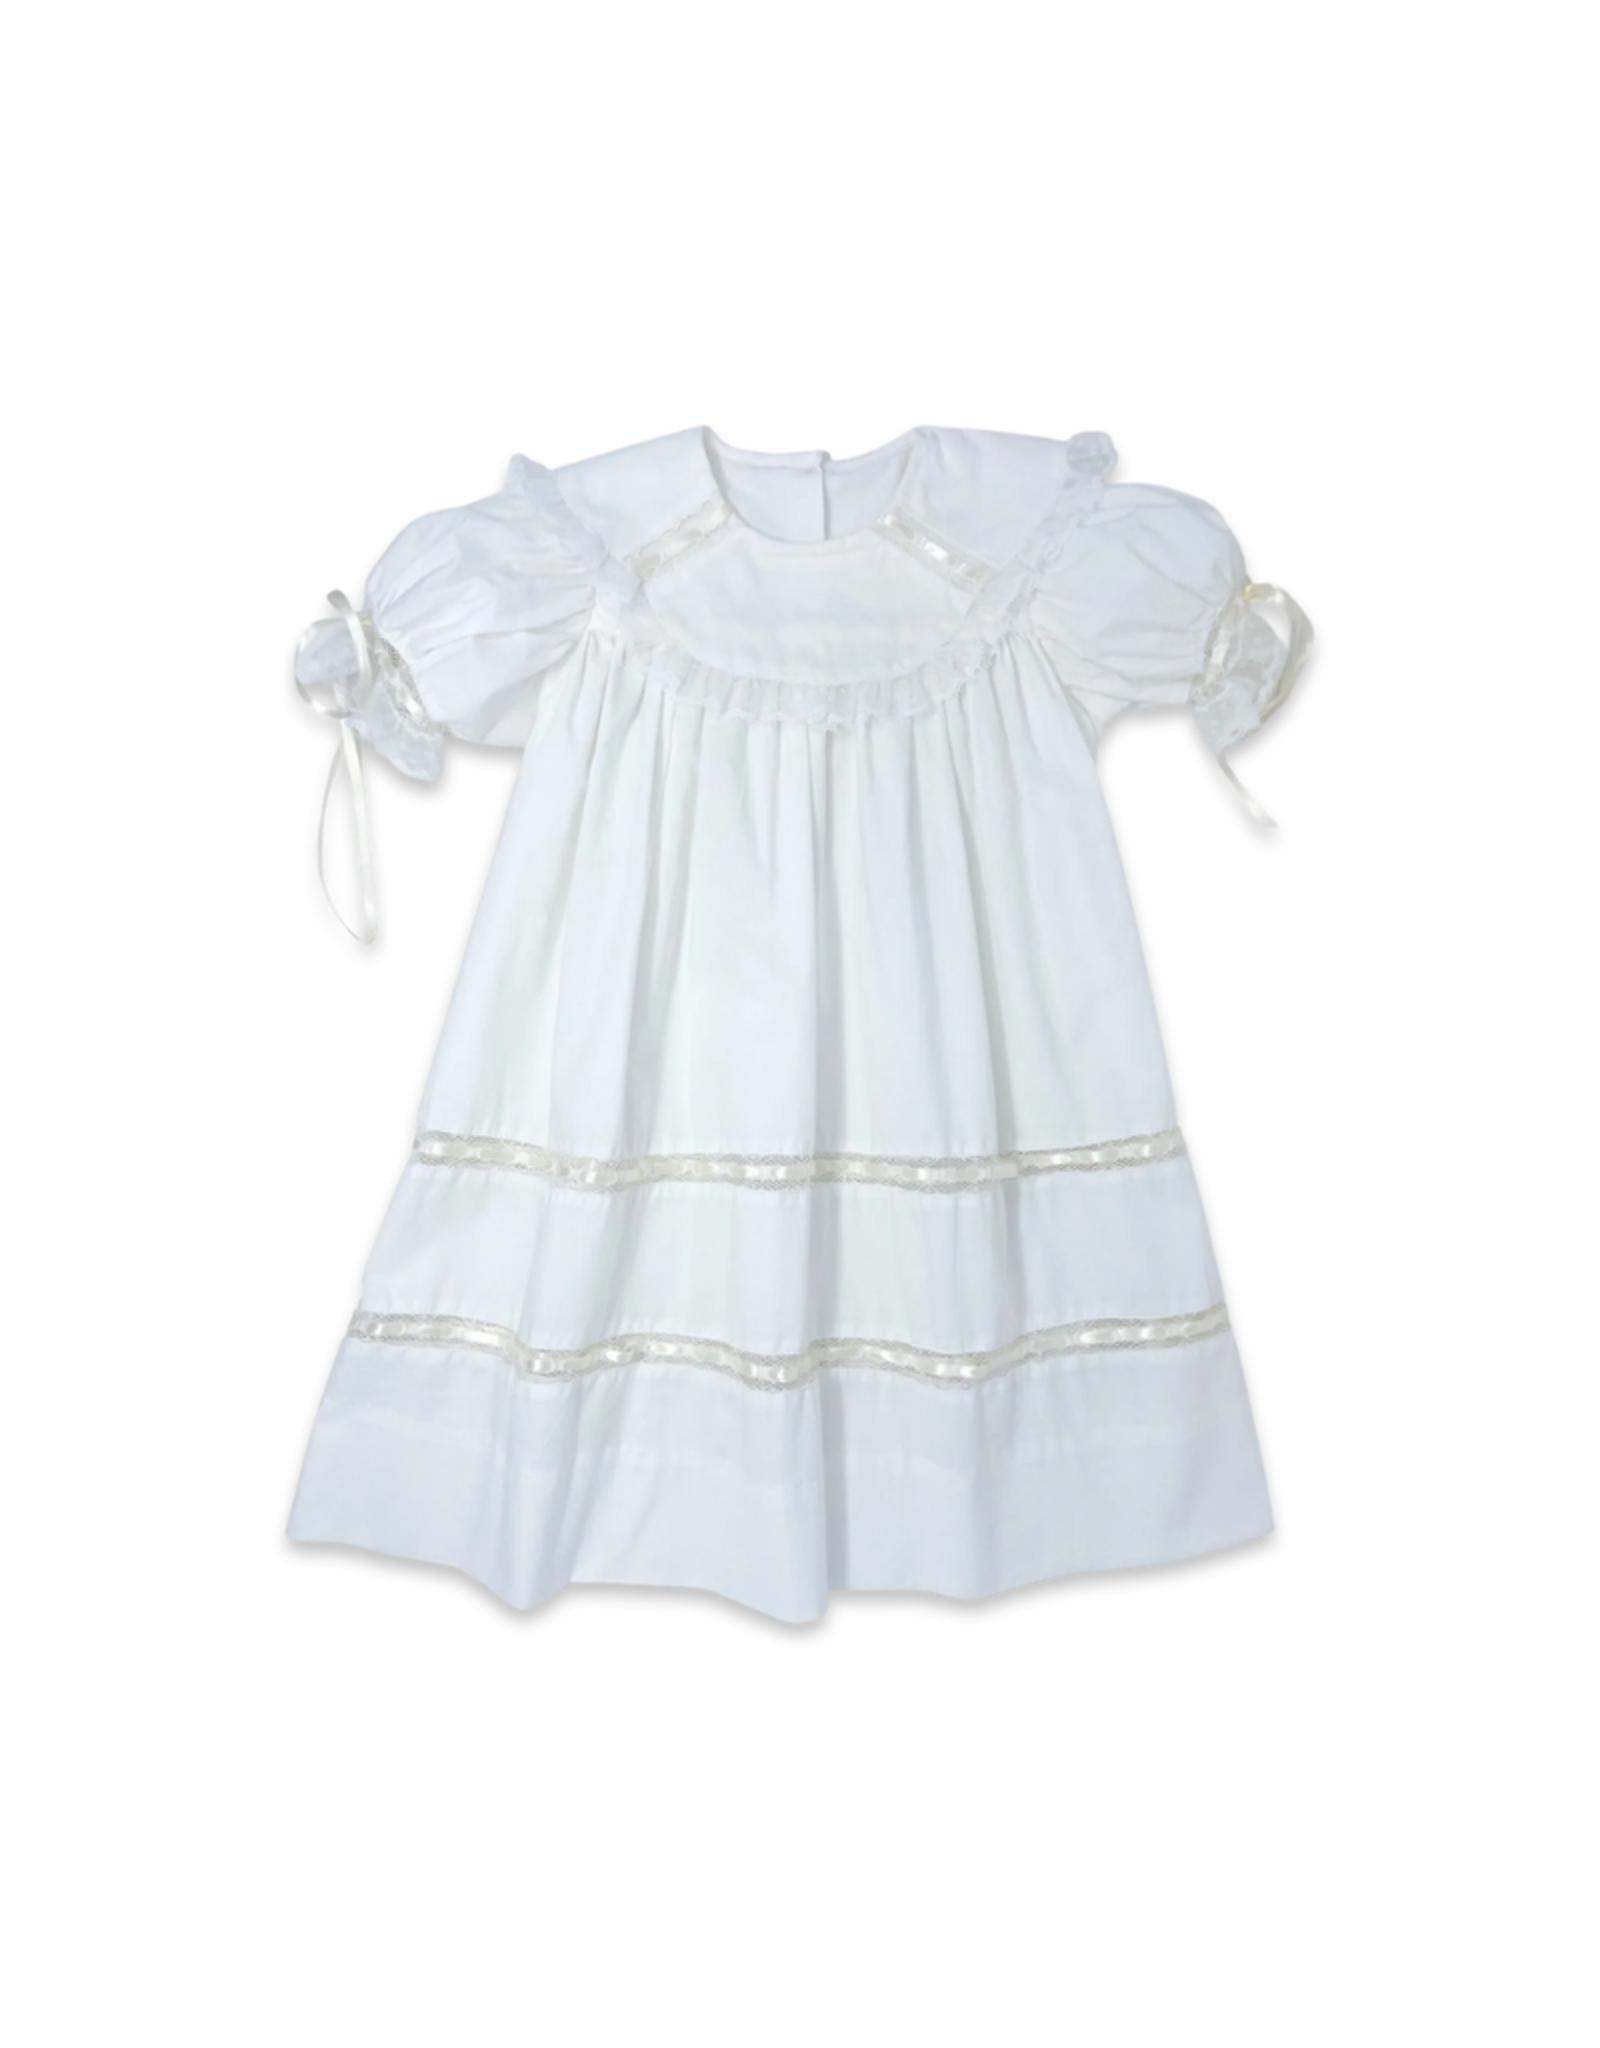 LullabySet Donahue Dress, White Batiste with Ecru Ribbon